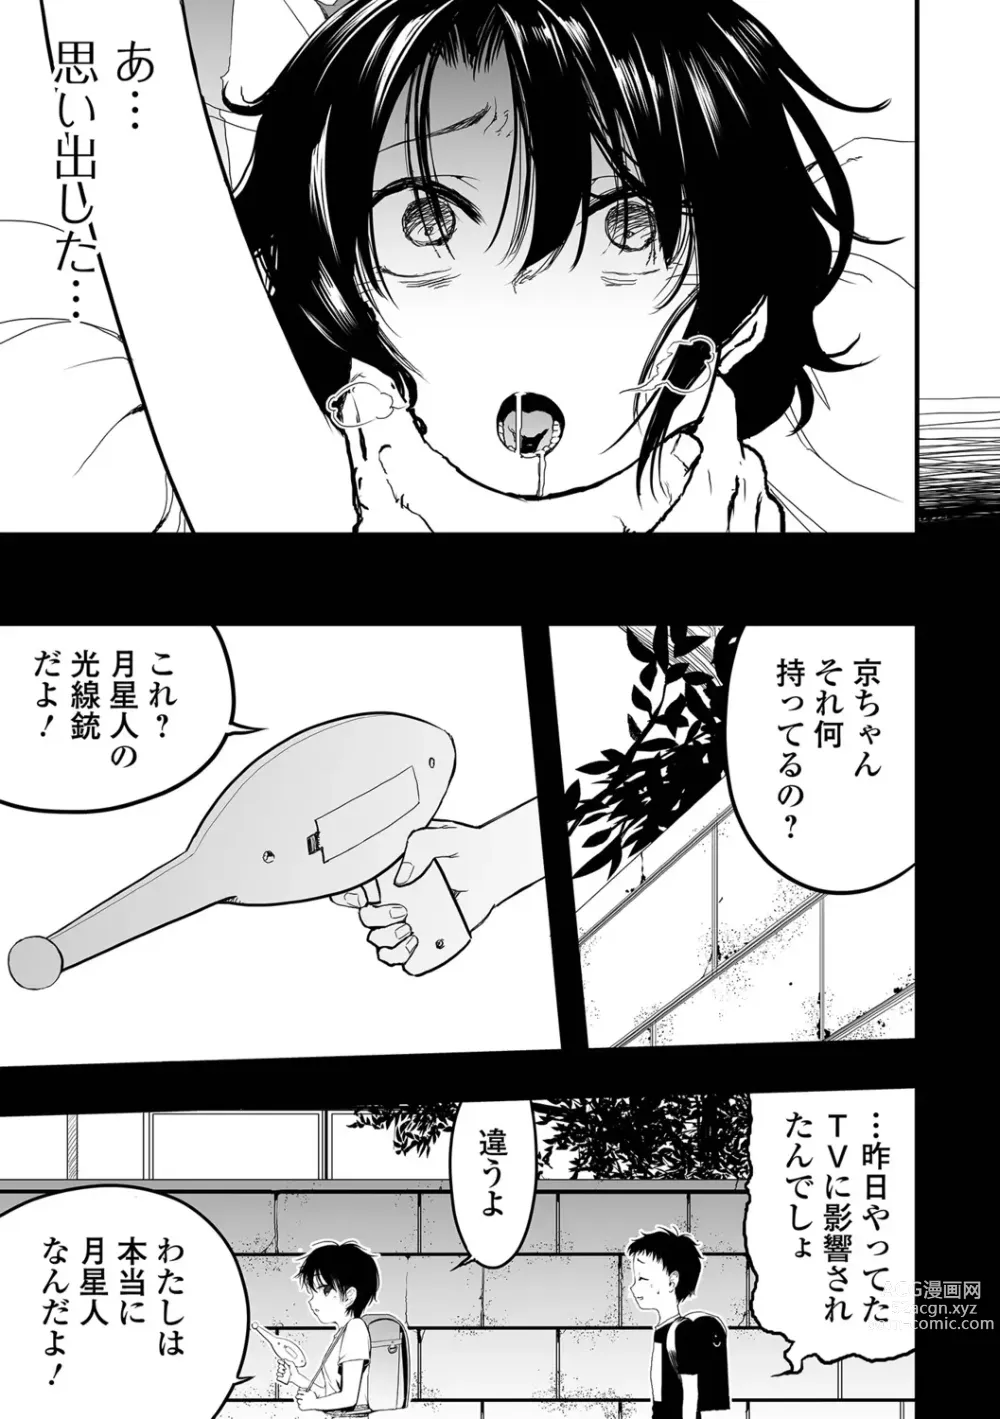 Page 95 of manga Ryona King Vol.23